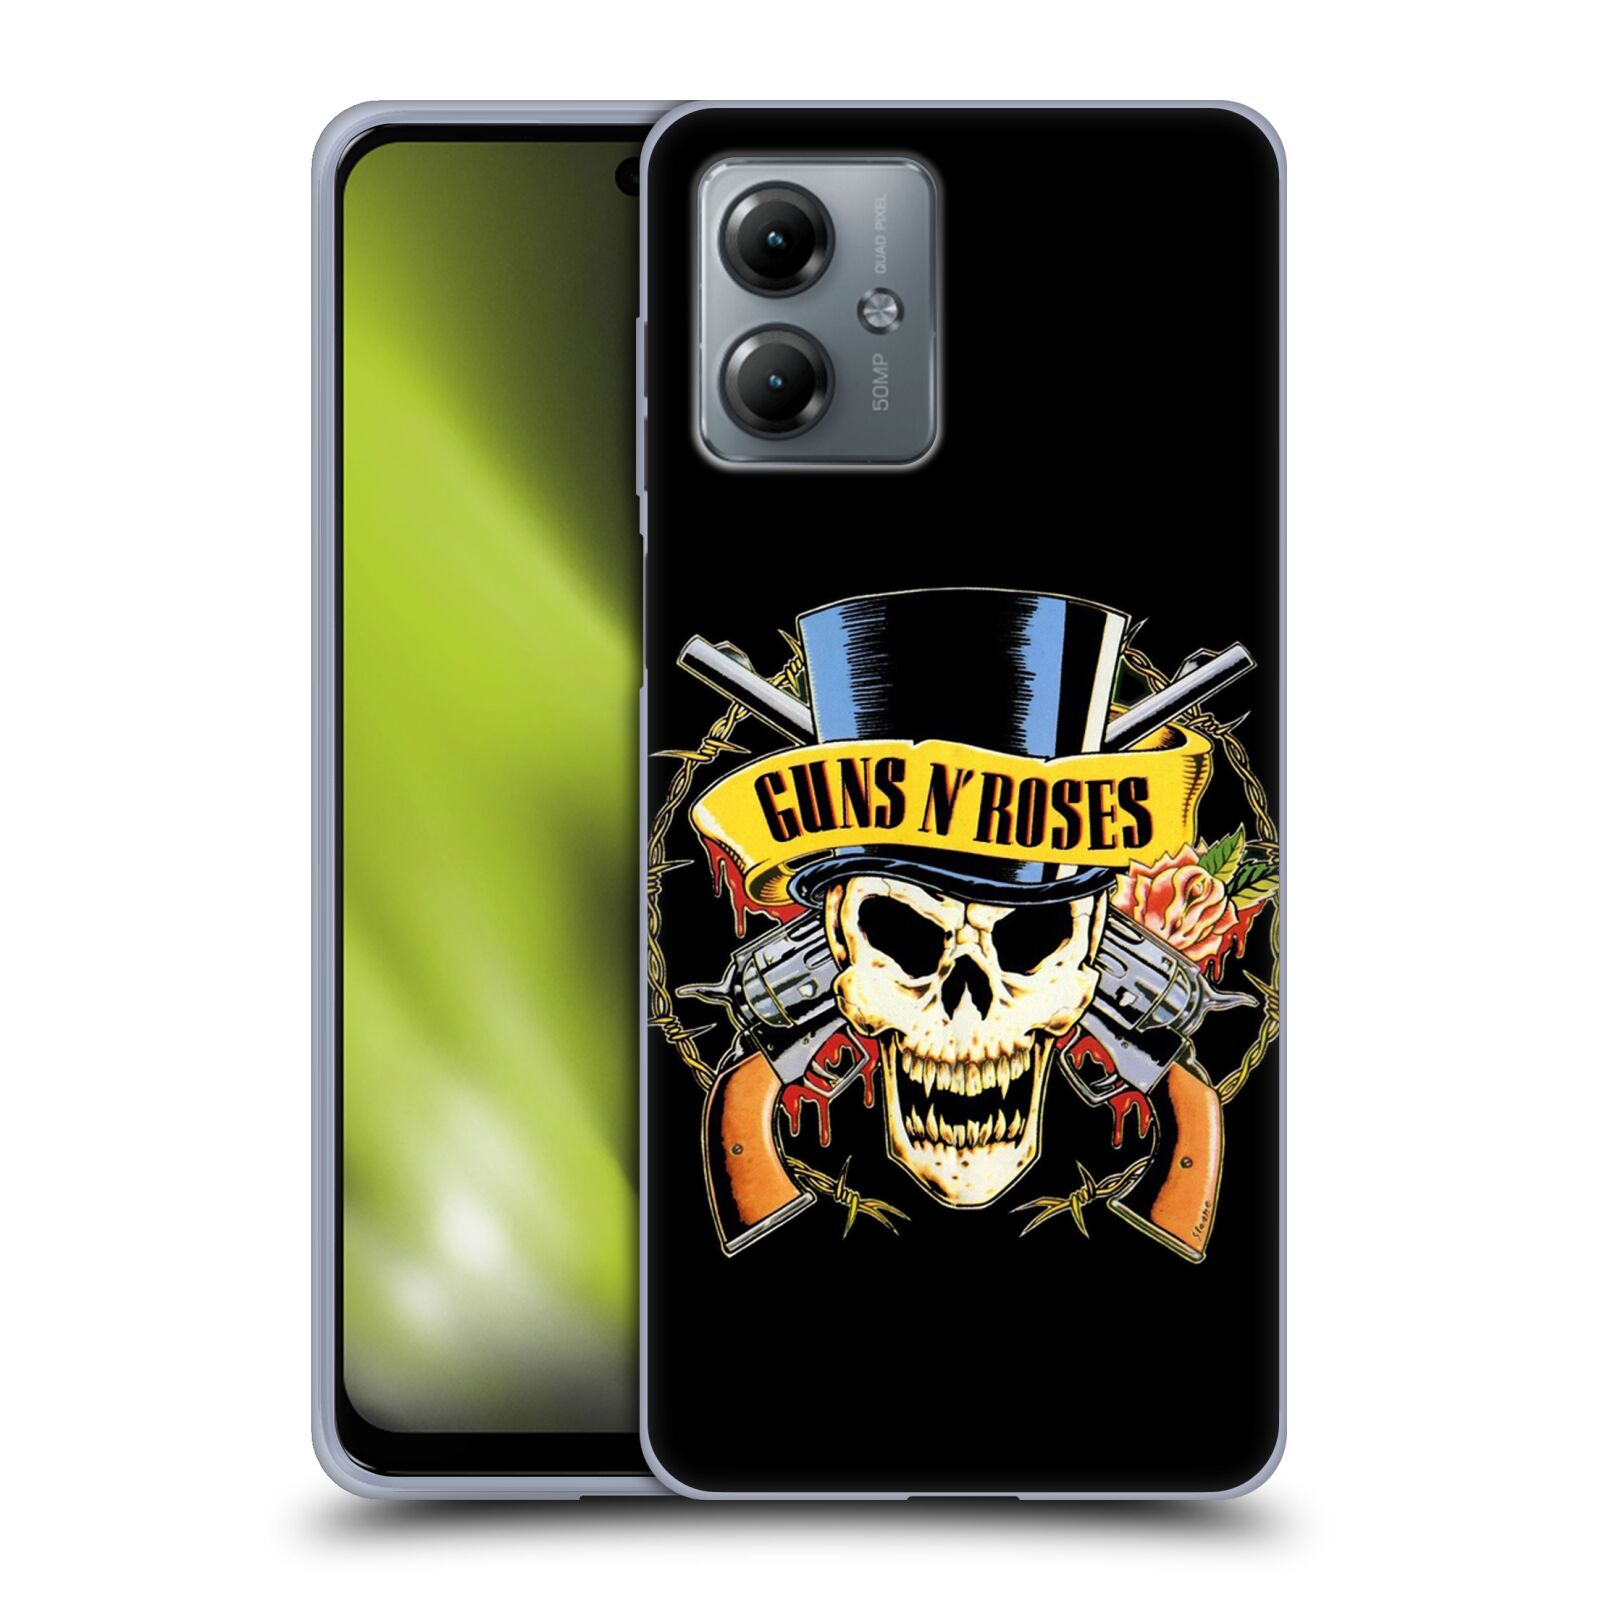 Silikonové pouzdro na mobil Motorola Moto G14 - Head Case - Guns N' Roses - Lebka (Silikonový kryt, obal, pouzdro na mobilní telefon Motorola Moto G14 s motivem Guns N' Roses - Lebka)